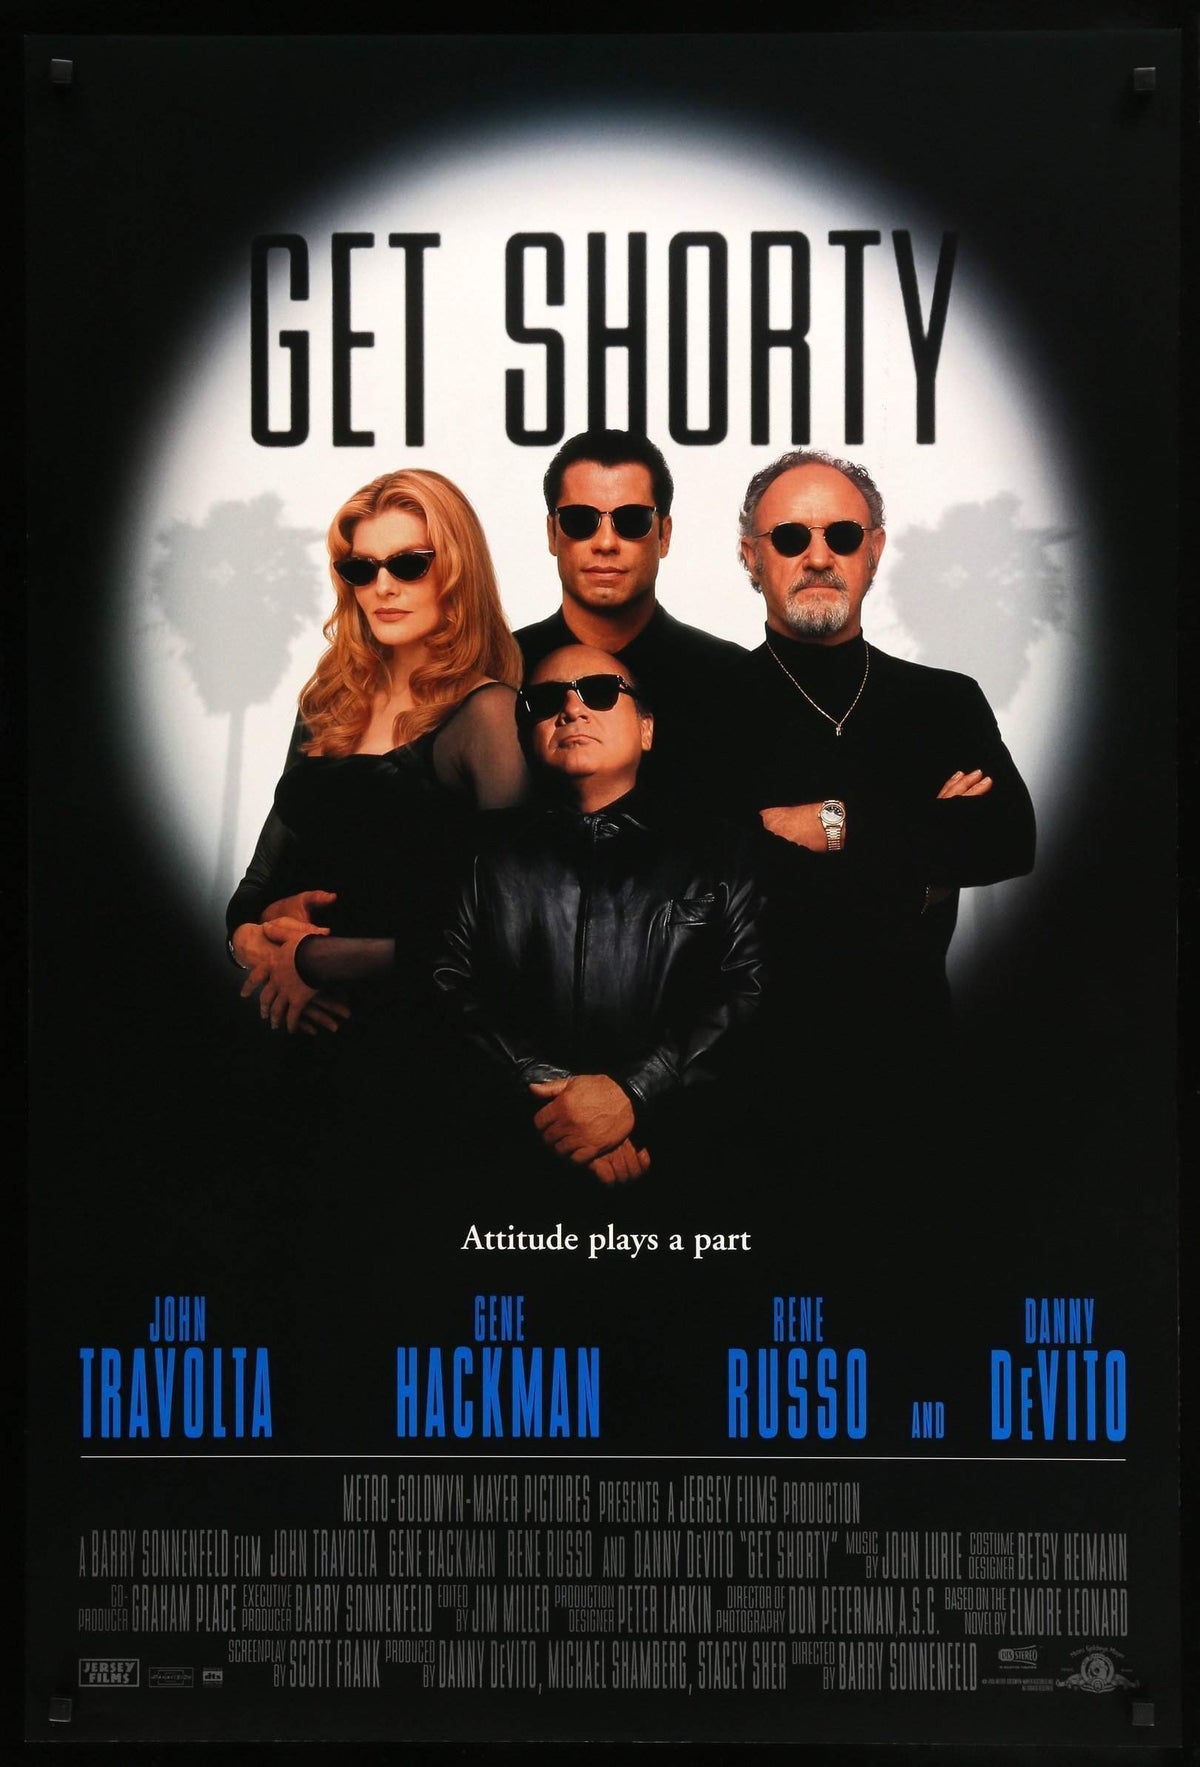 Get Shorty (1995) original movie poster for sale at Original Film Art